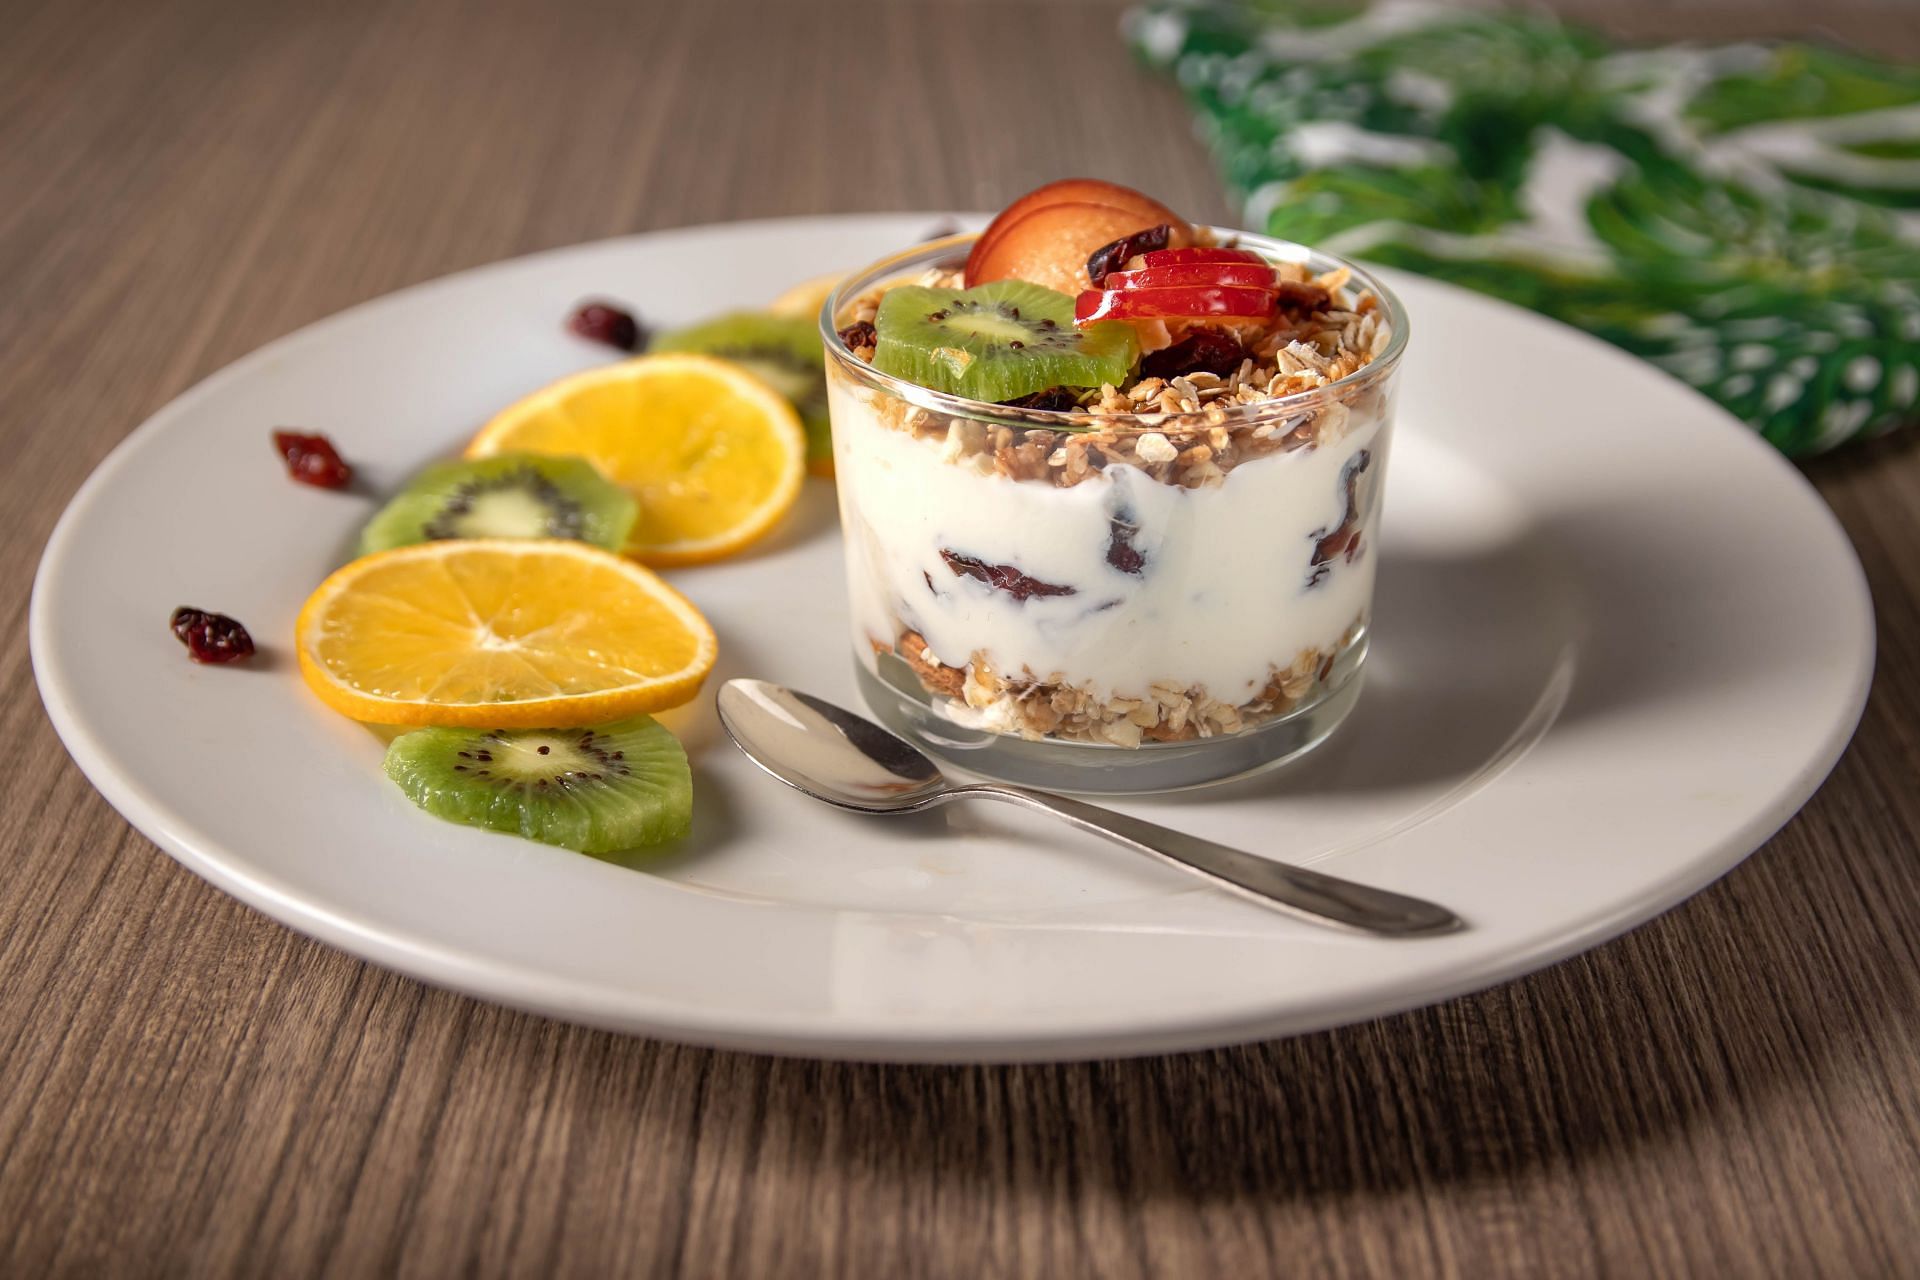 Greek yogurt is good for gut health (Image via Unsplash/Daniel Cabriles)